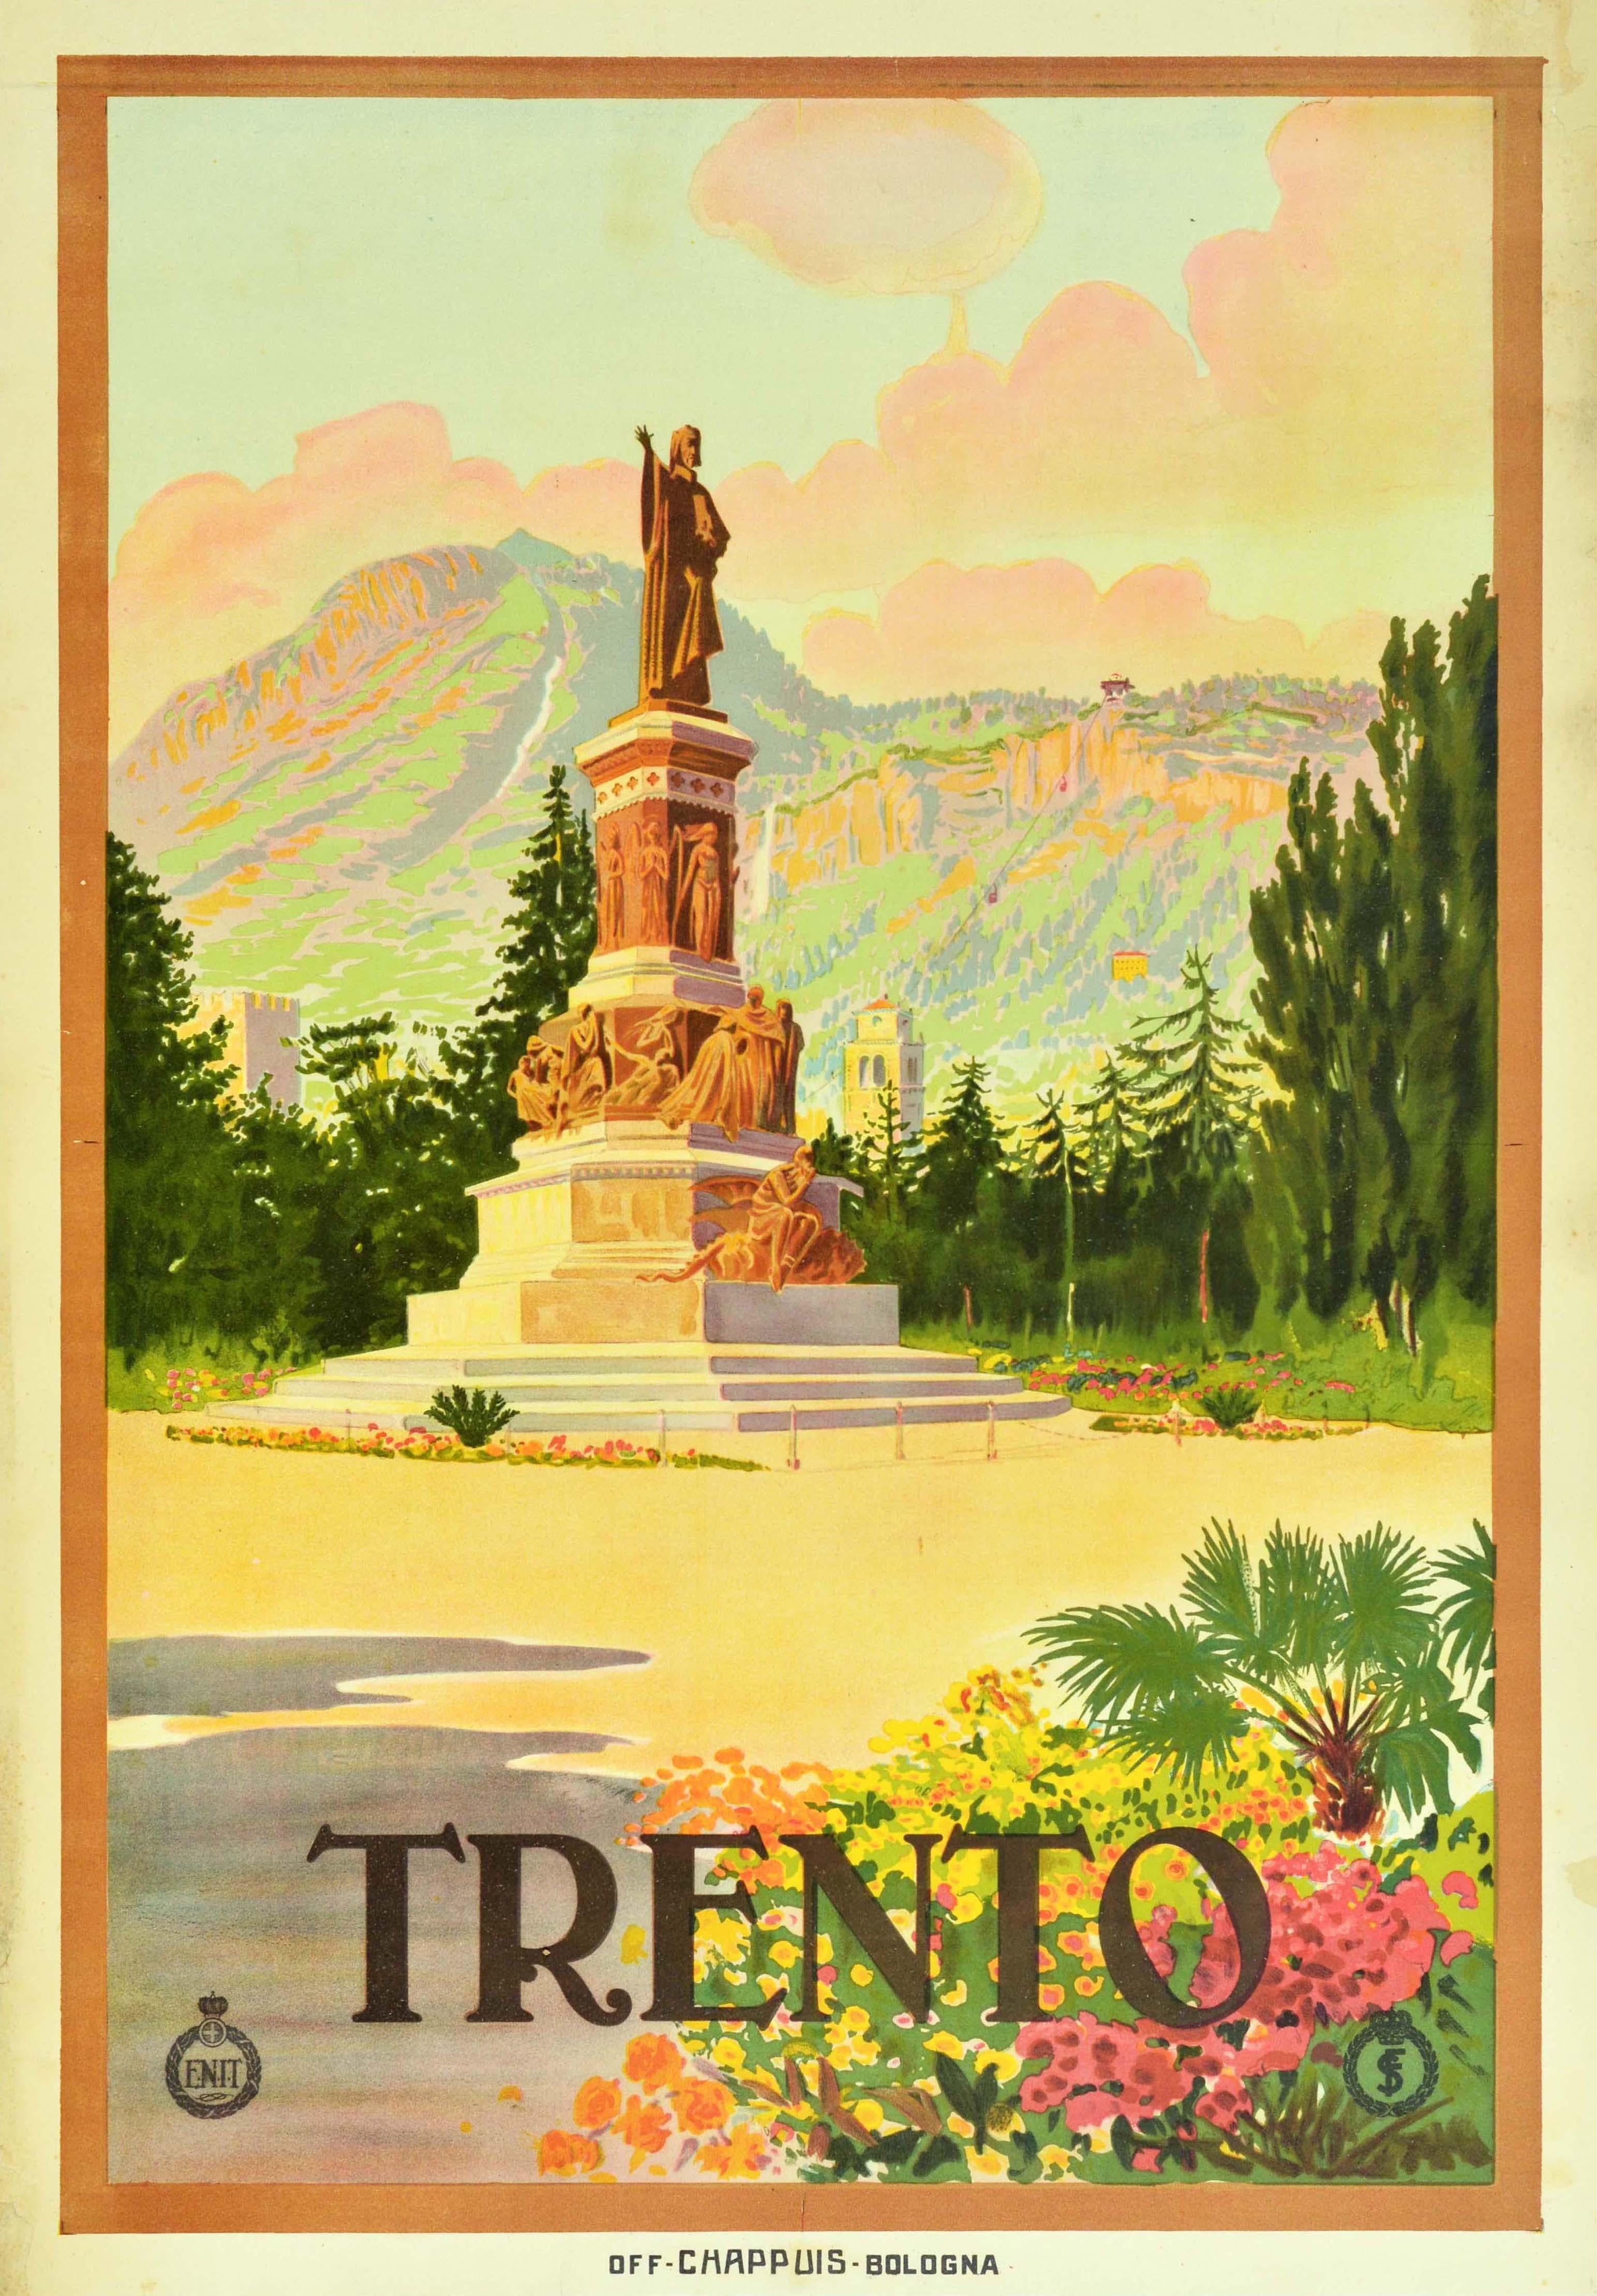 Unknown Print - Original Vintage Italy Travel Poster Trento Alps Monument To Dante ENIT Railways